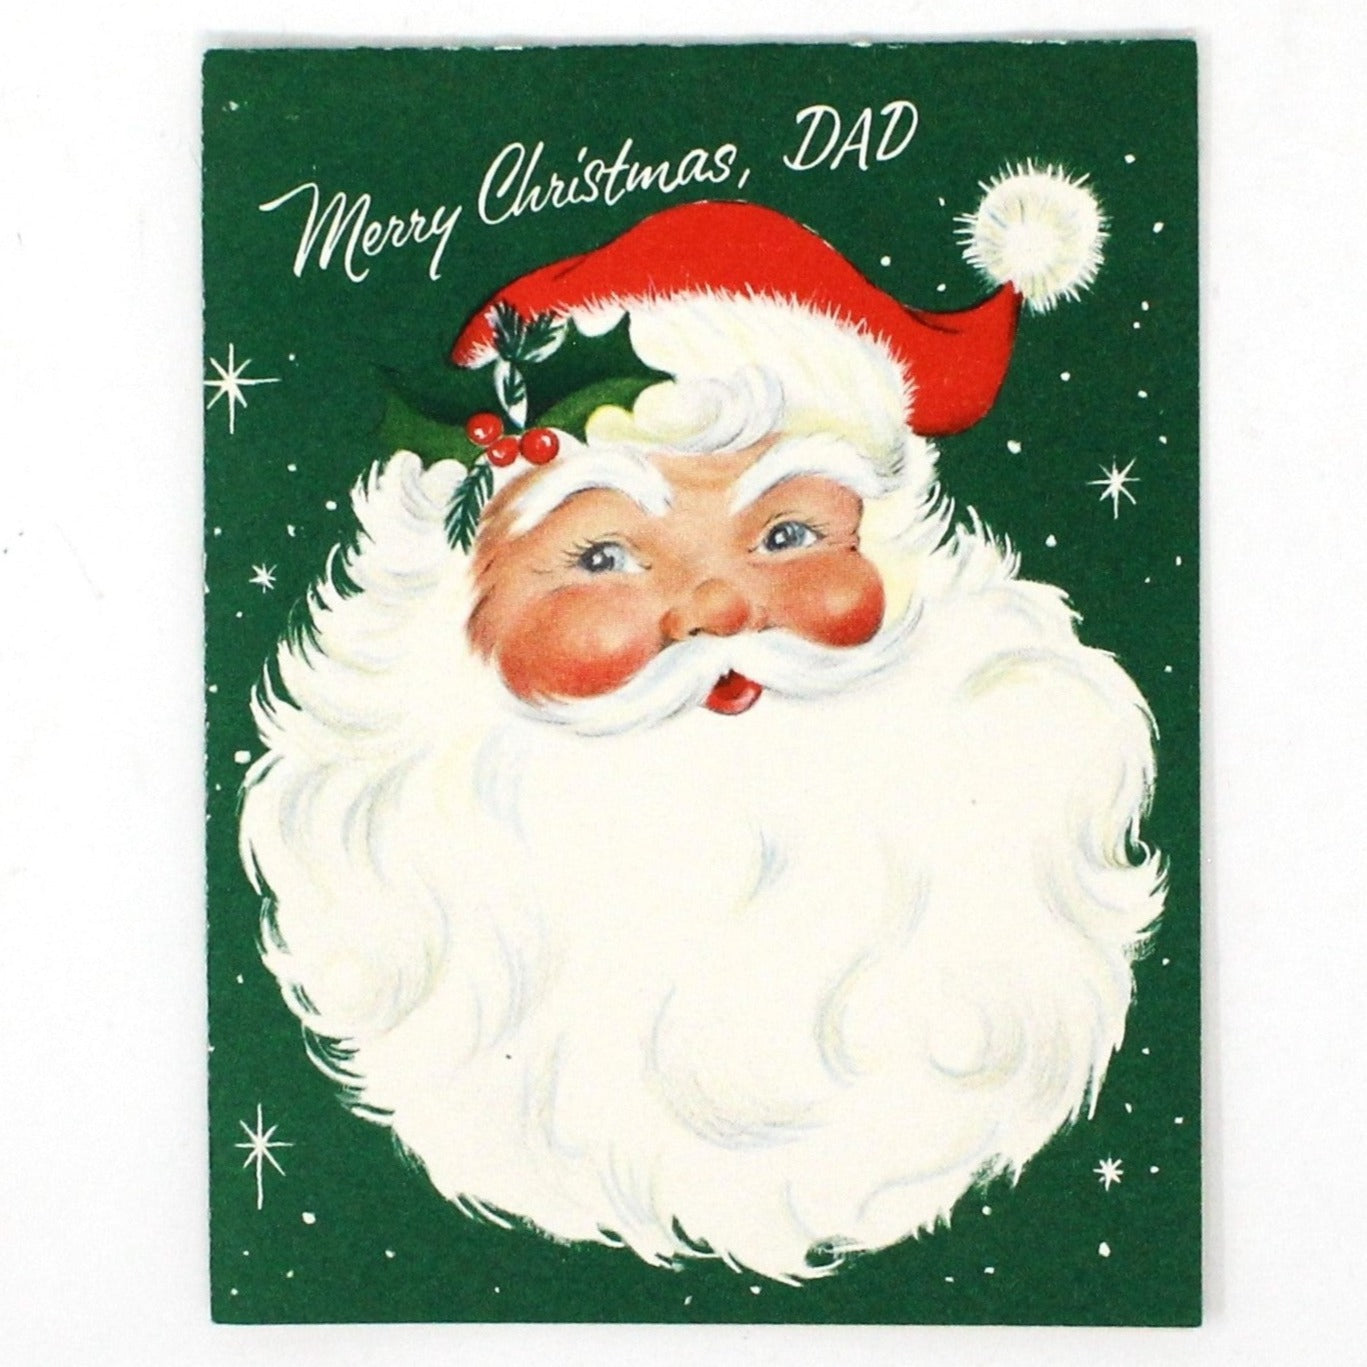 Greeting Card / Christmas Card, Merry Christmas Dad, Original Vintage Stanley Greetings